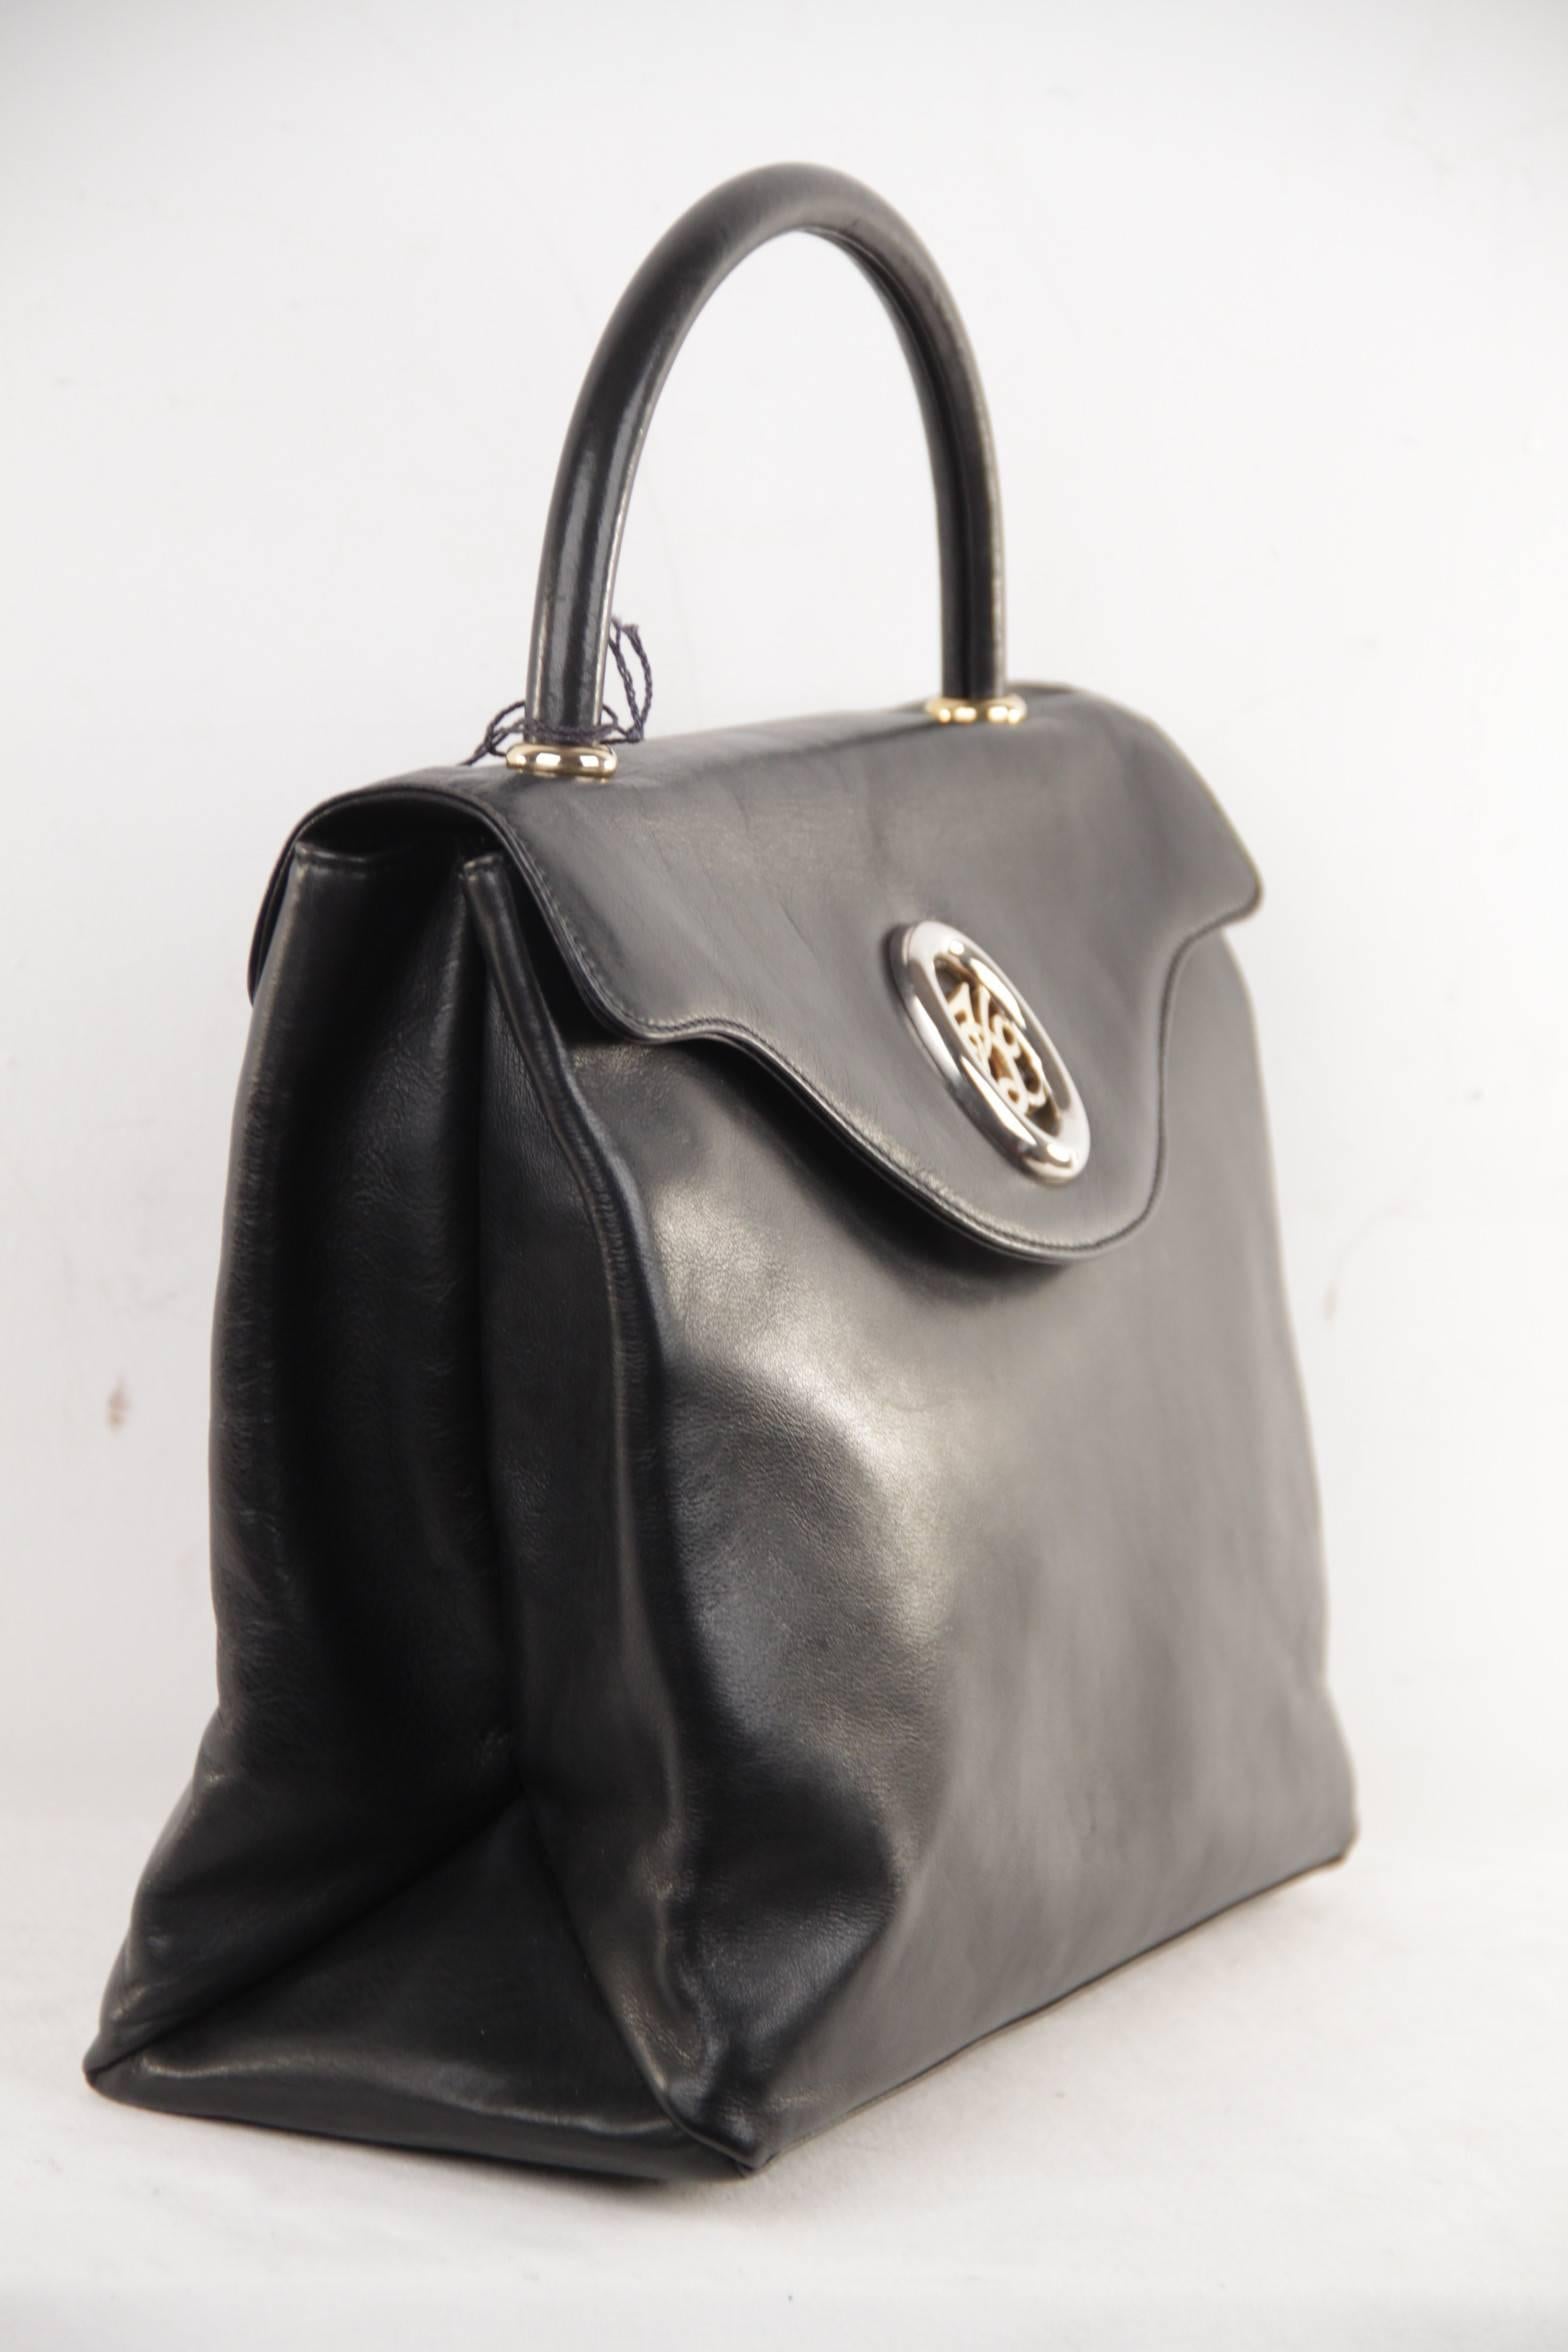 Women's KARL LAGERFELD Black Leather HANDBAG Top Handle Bag FLAP PURSE Satchel